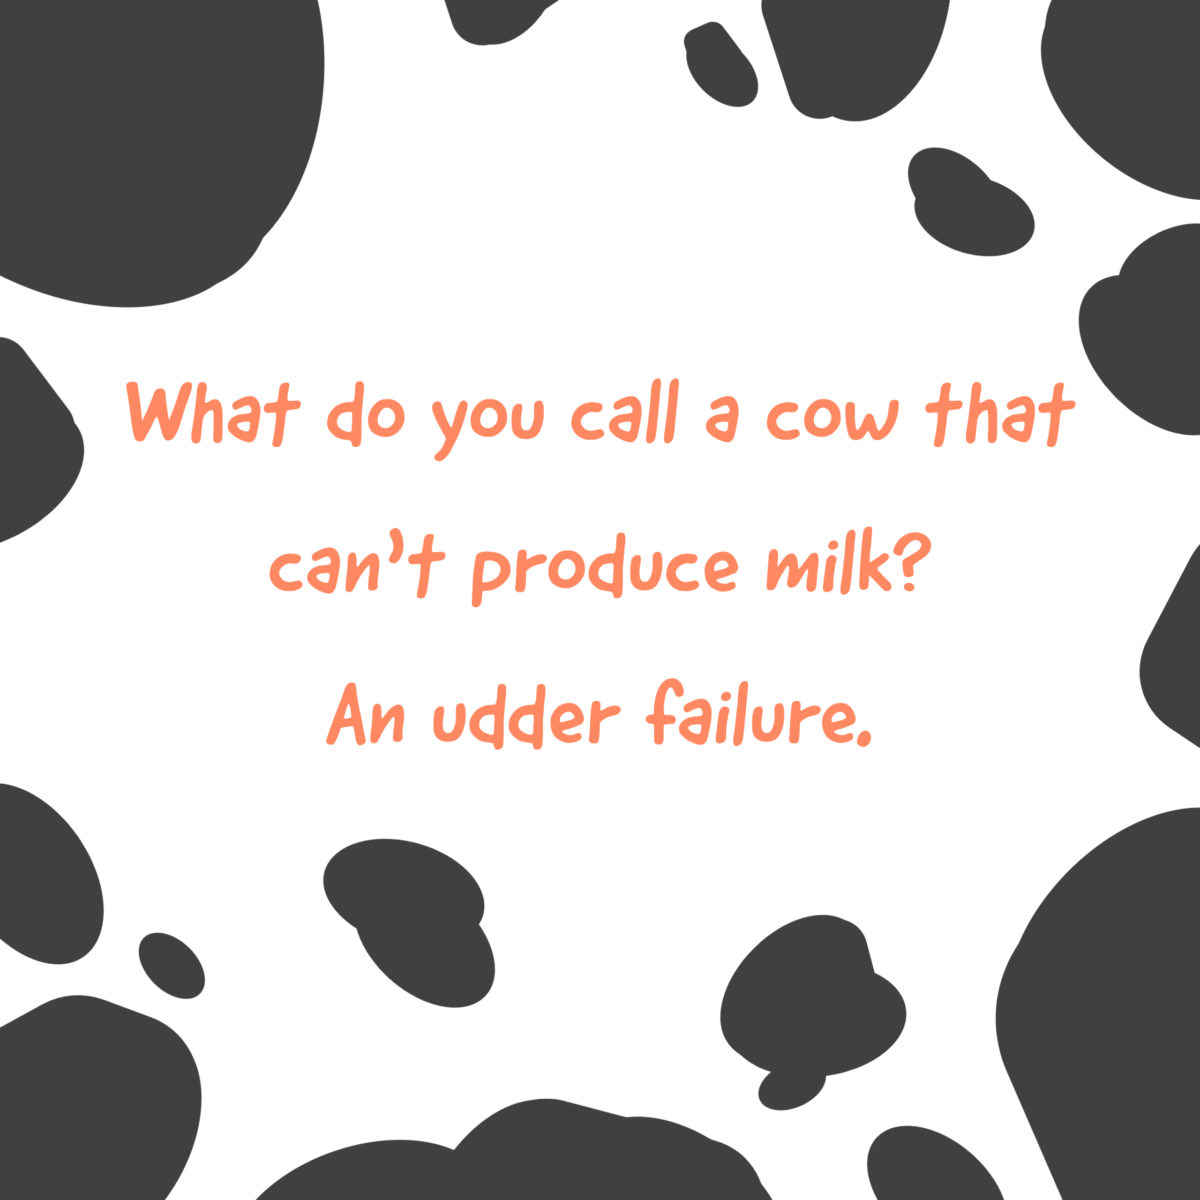 cow jokes